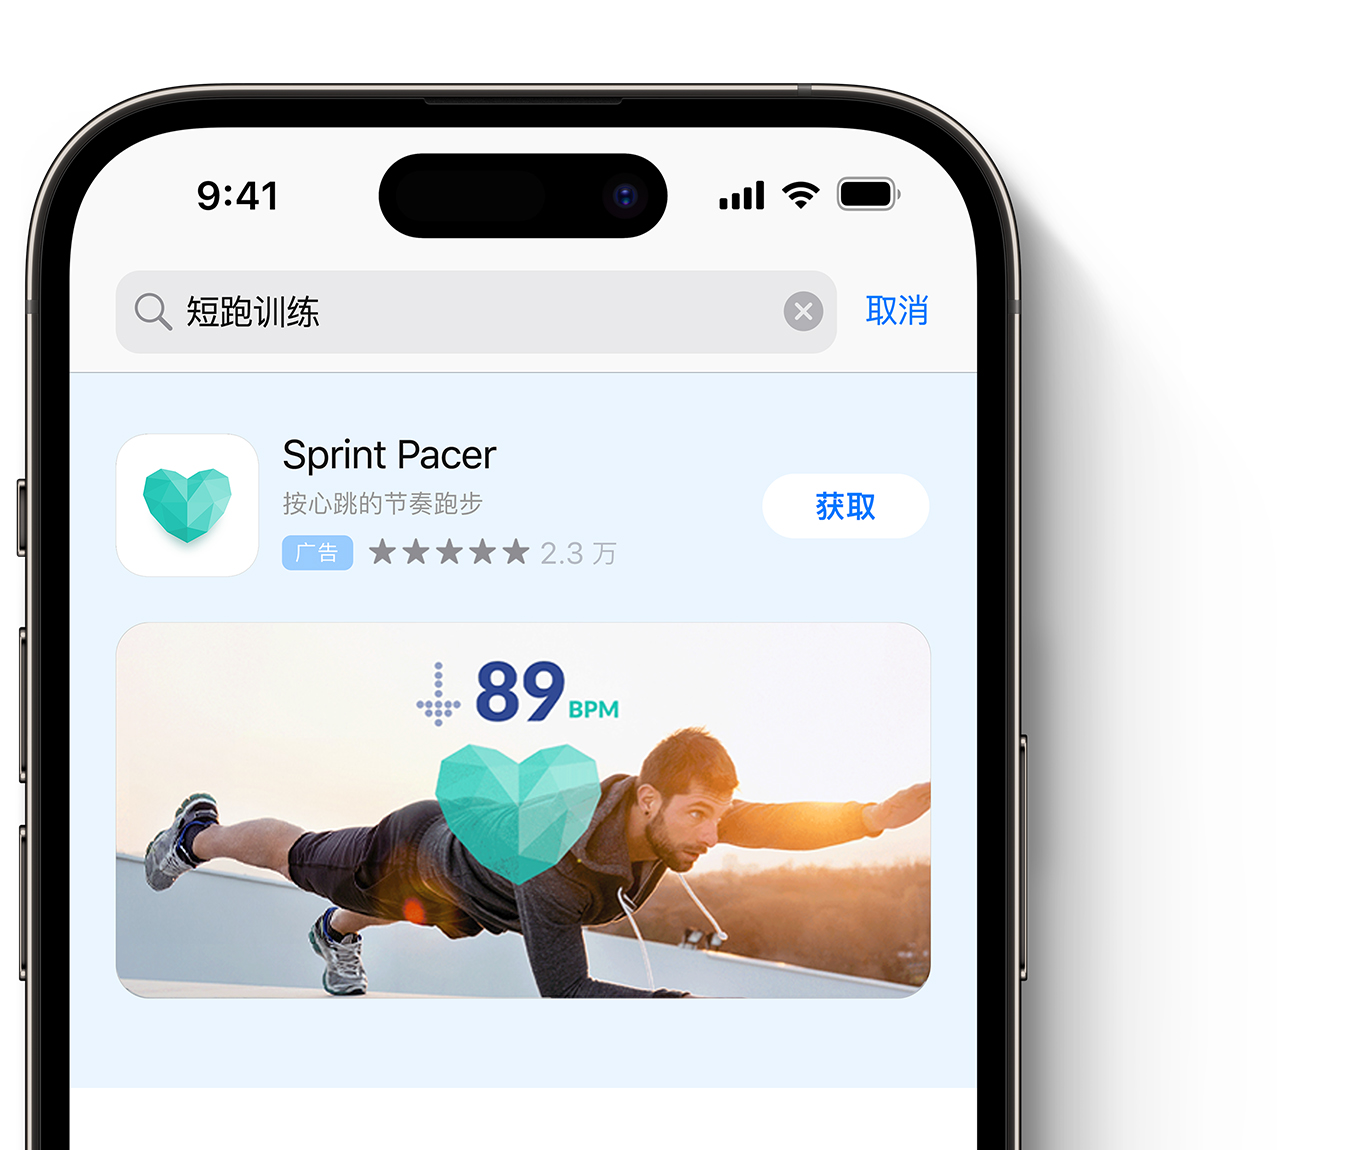 App Store 搜索结果的顶部展示了 app“Sprint Pacer”的广告。 